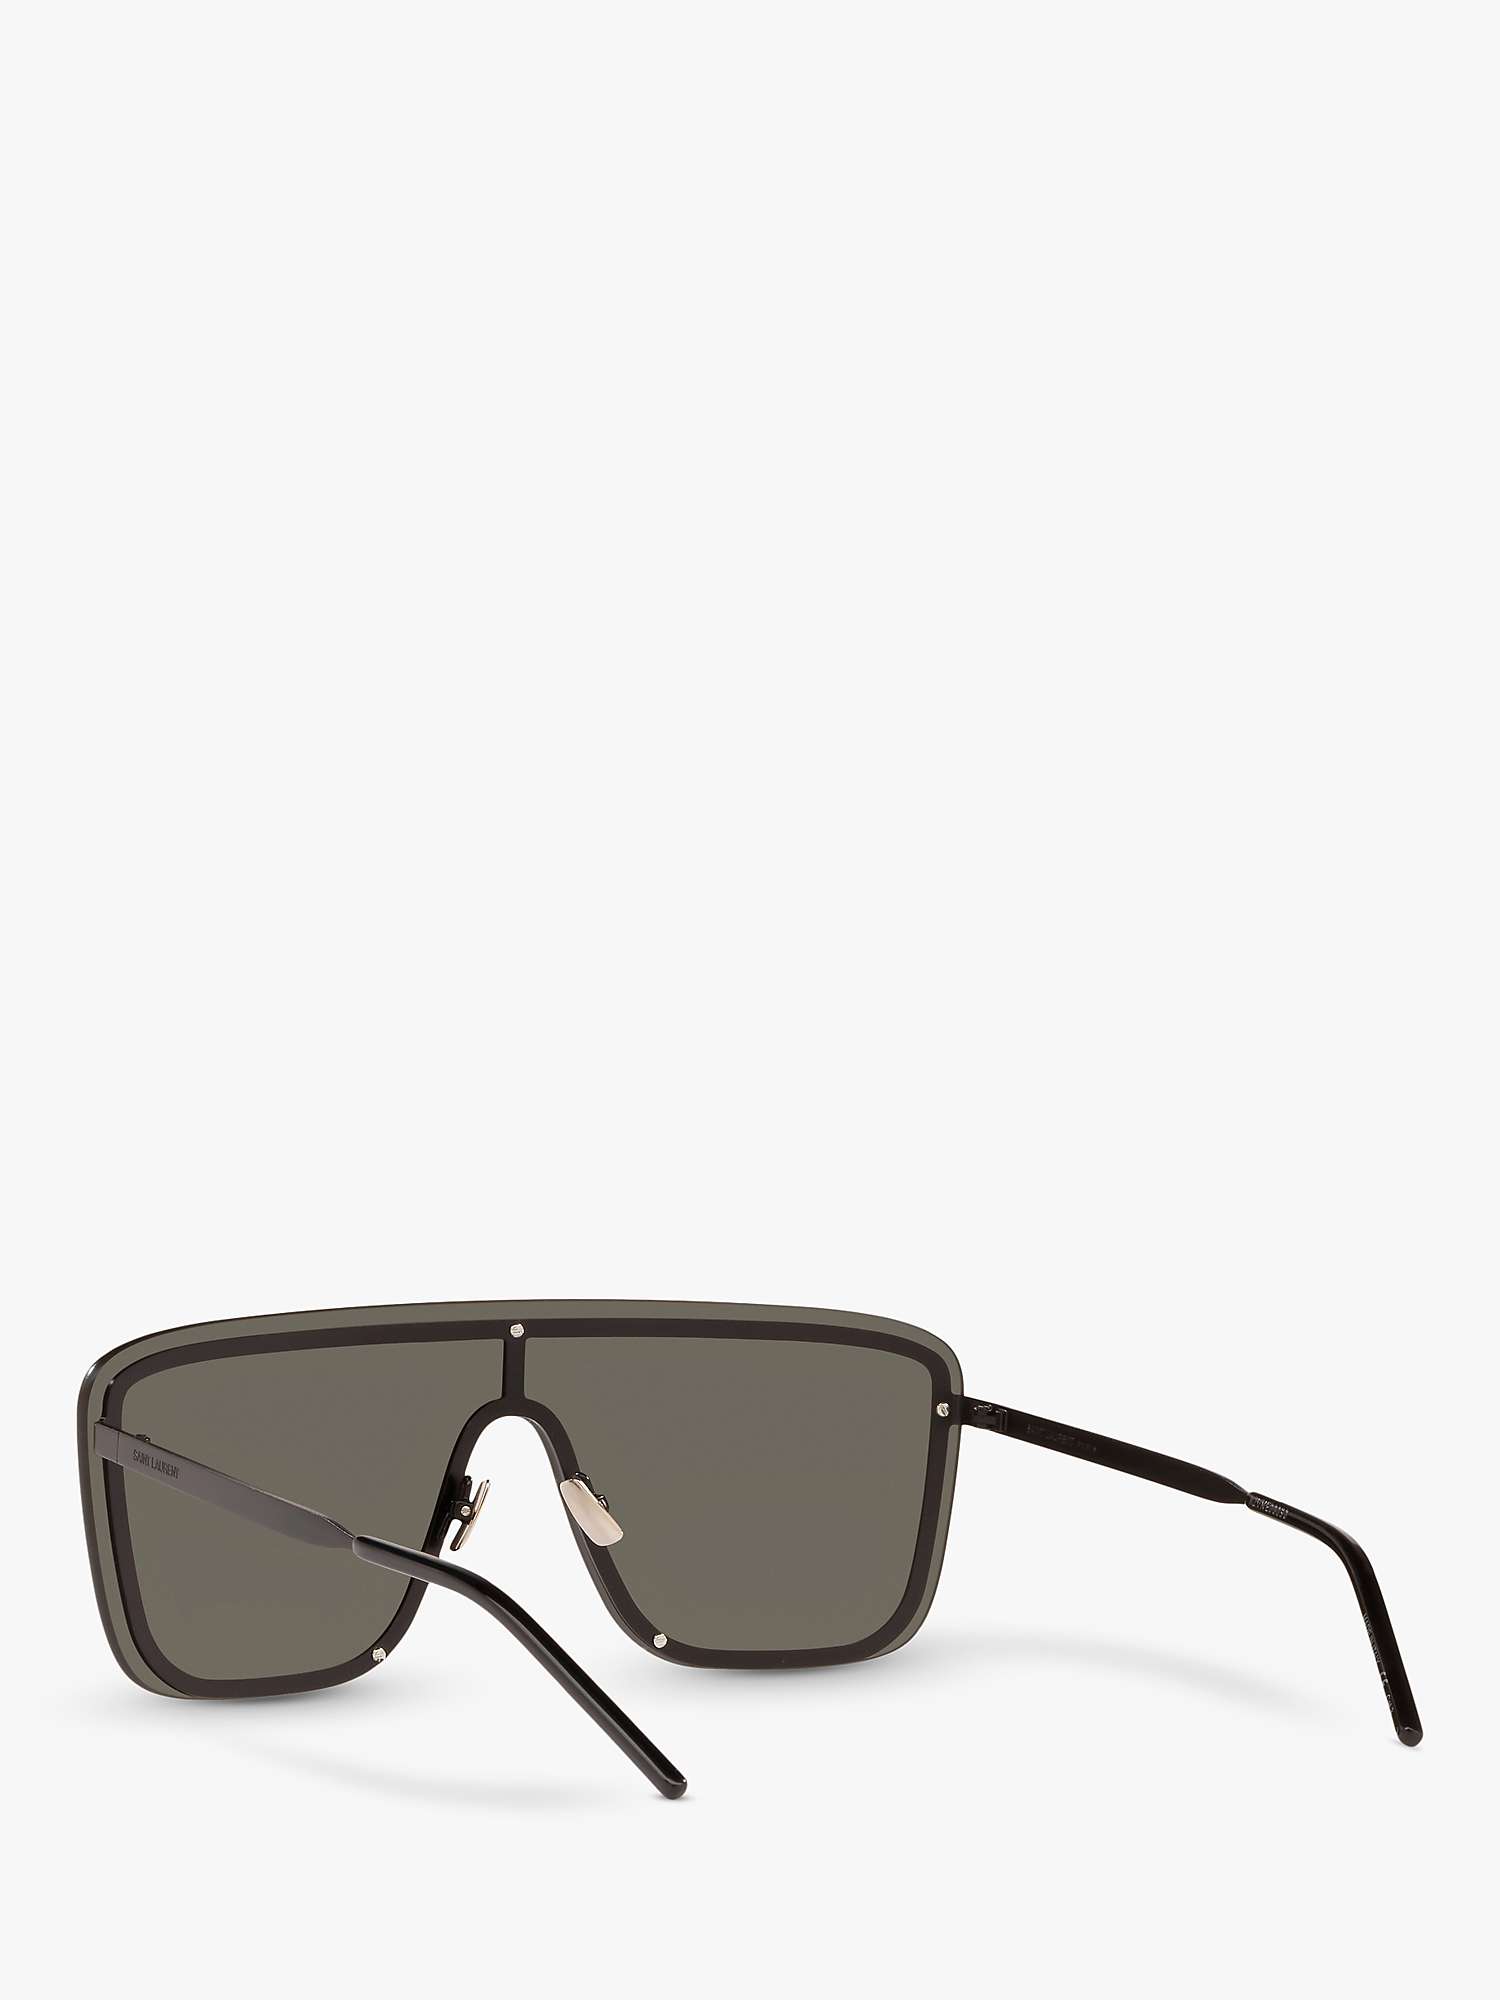 Buy Yves Saint Laurent SL 364 Unisex Rectangular Sunglasses Online at johnlewis.com